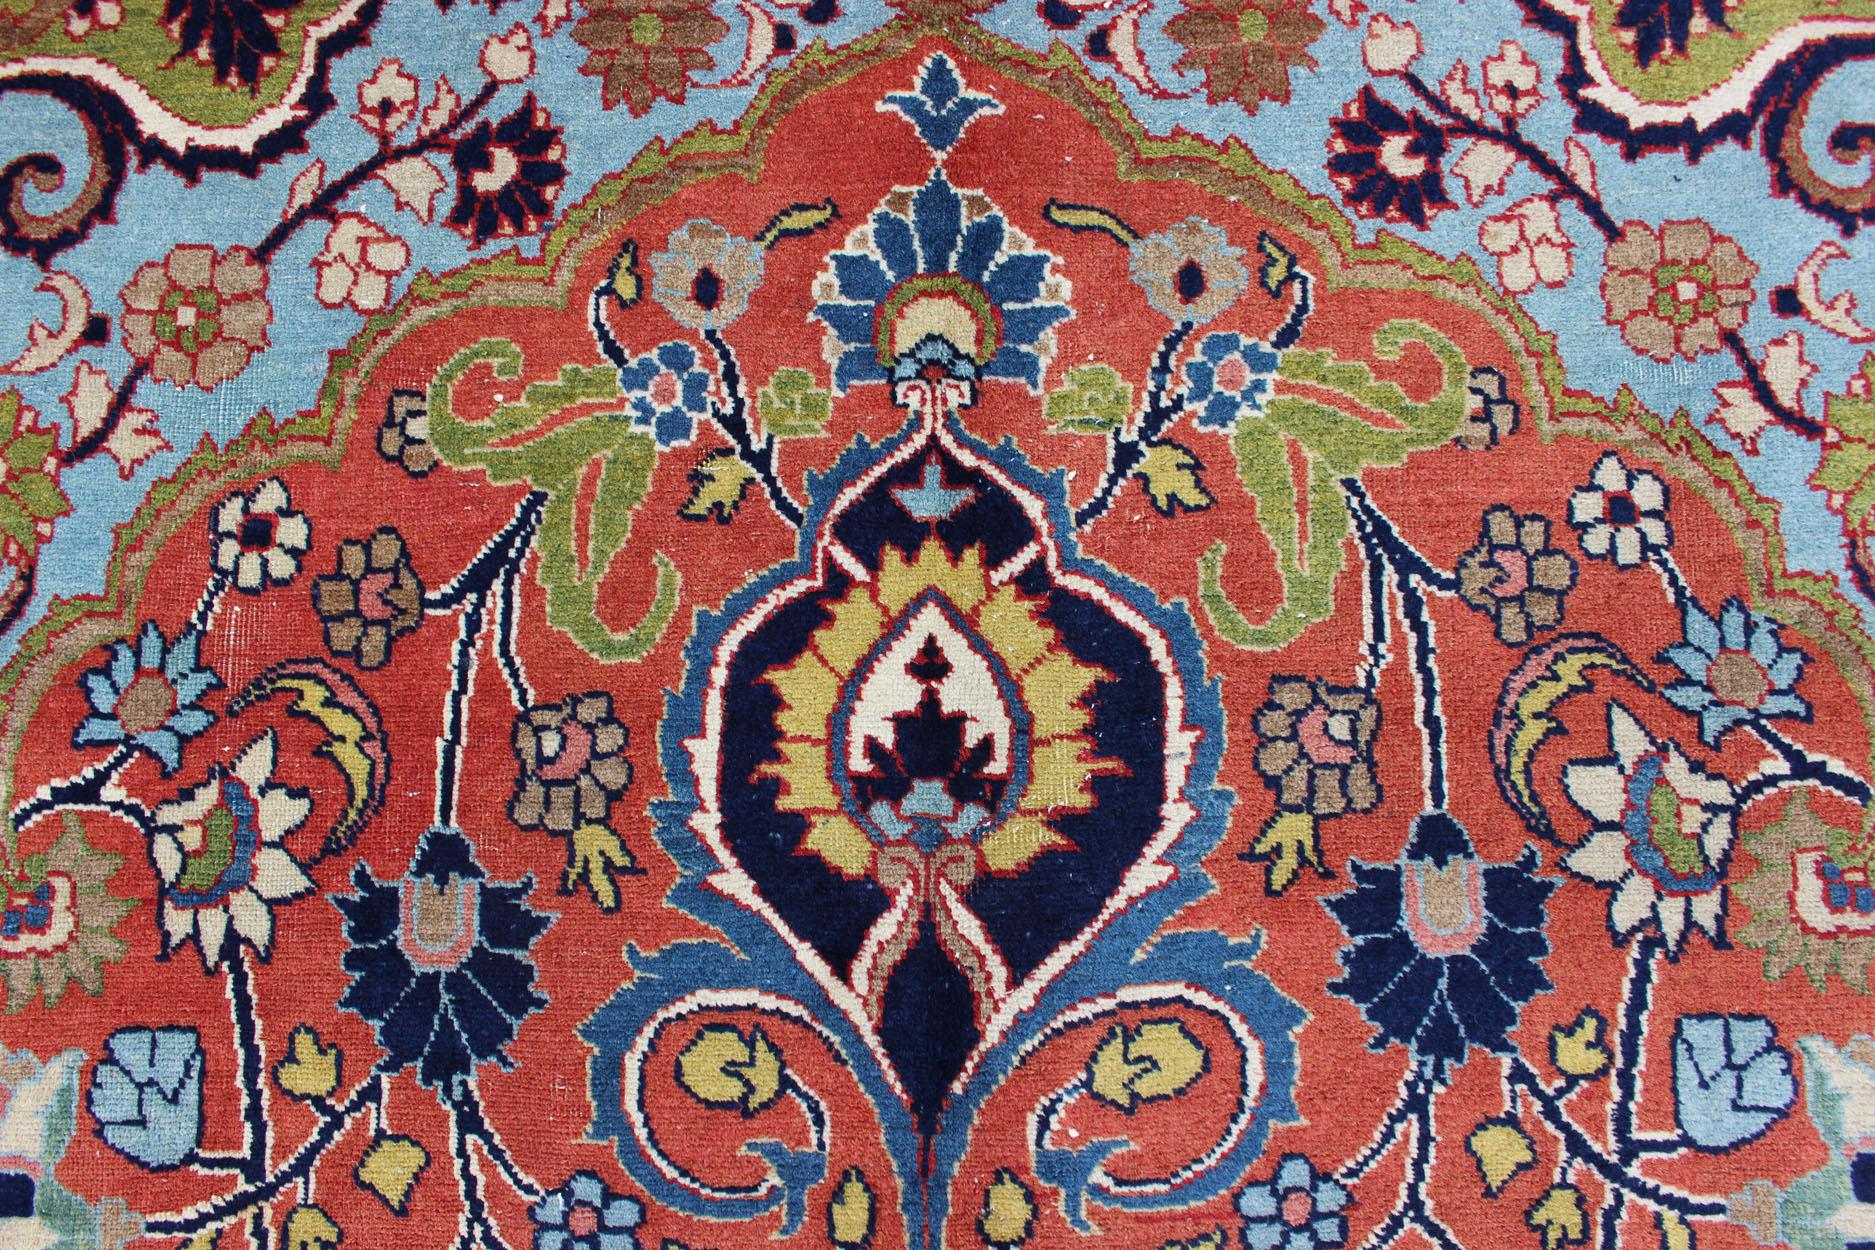 Antique Fine Persian Classic Design Tabriz Rug in Orange, Blue & Multi Colors For Sale 6